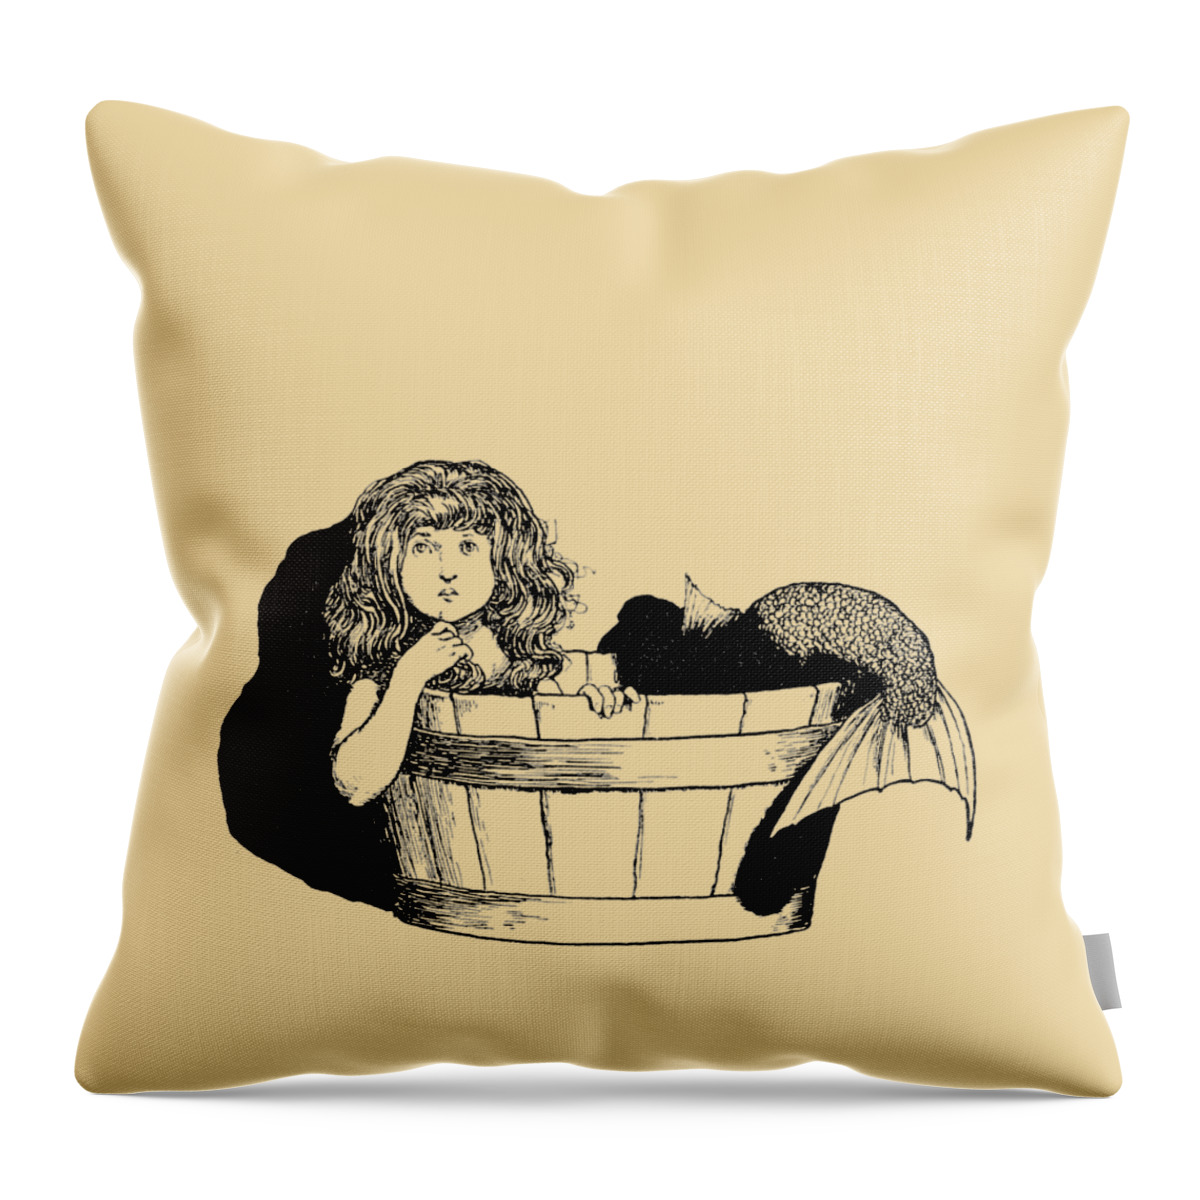 Mermaid Throw Pillow featuring the digital art Cute Mermaid In Barrel Tub by Madame Memento